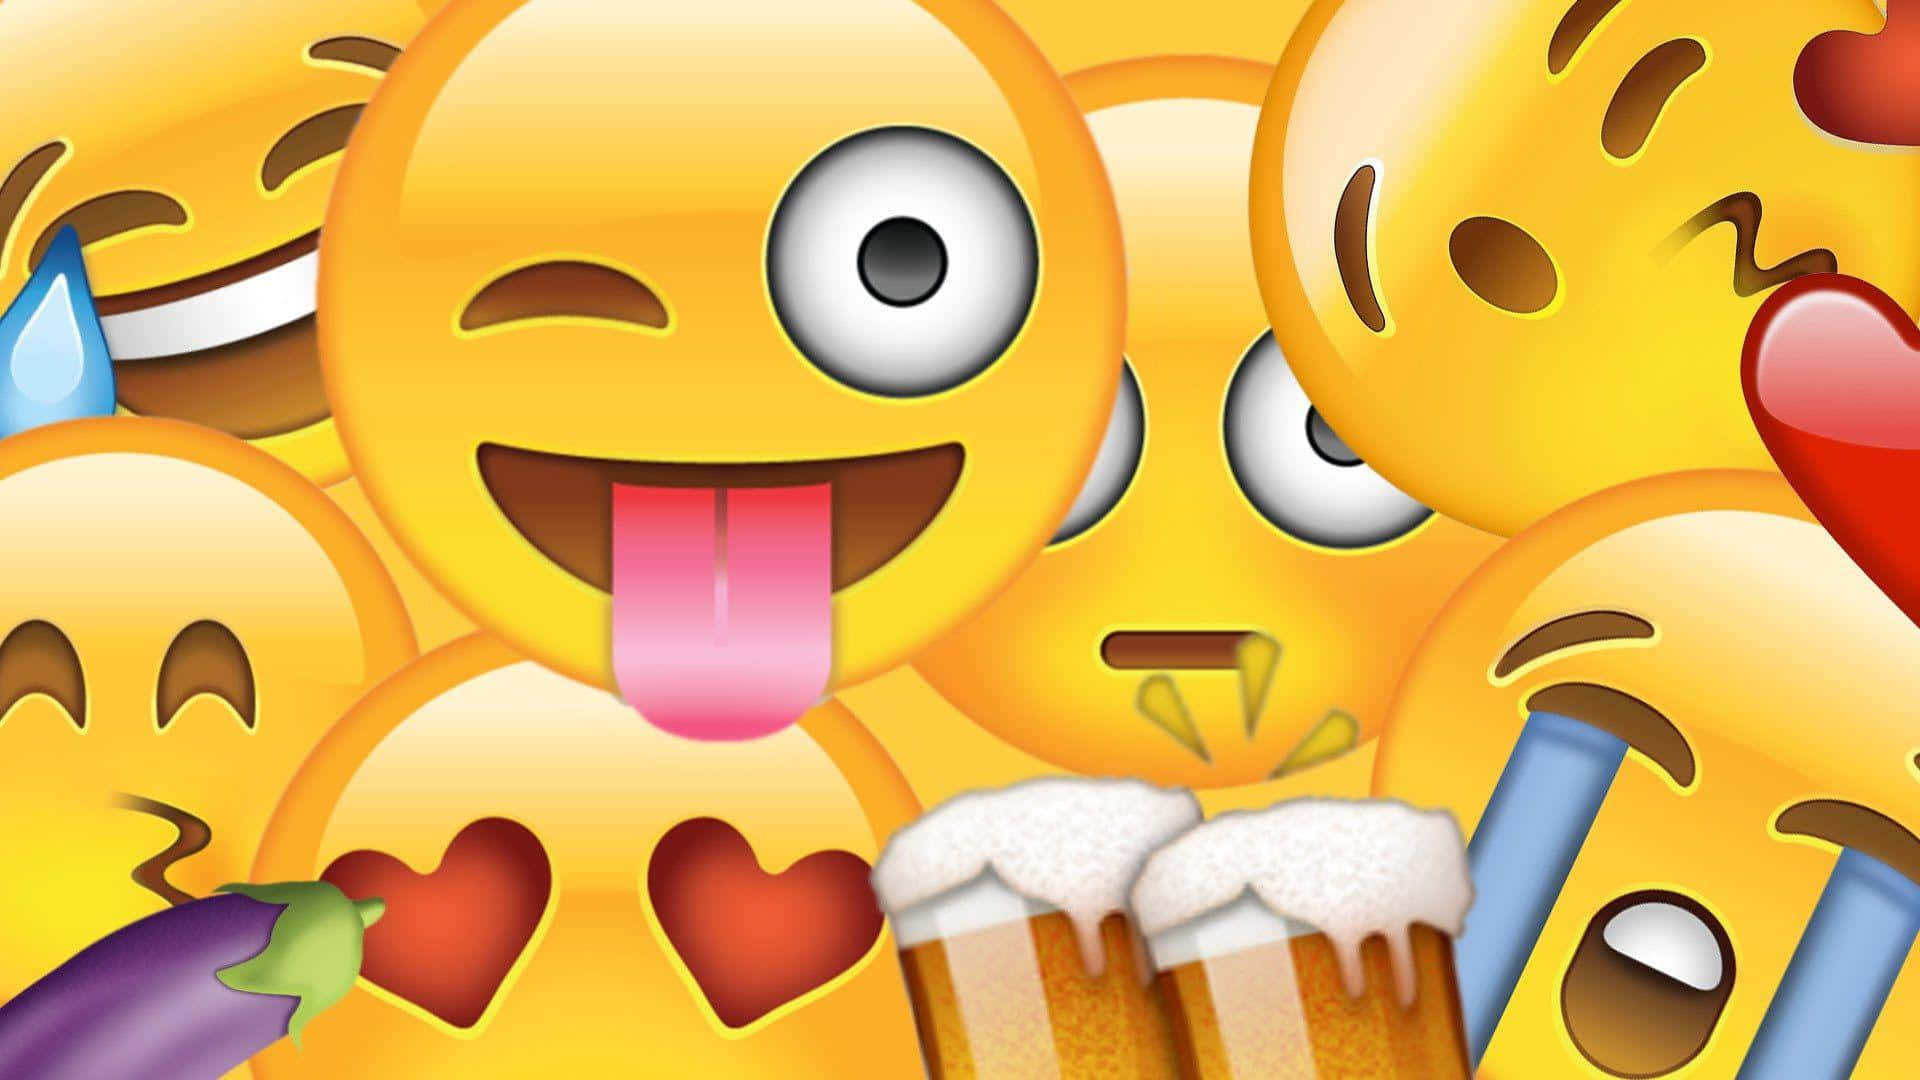 Silly And Cute Emoji Desktop Wallpaper